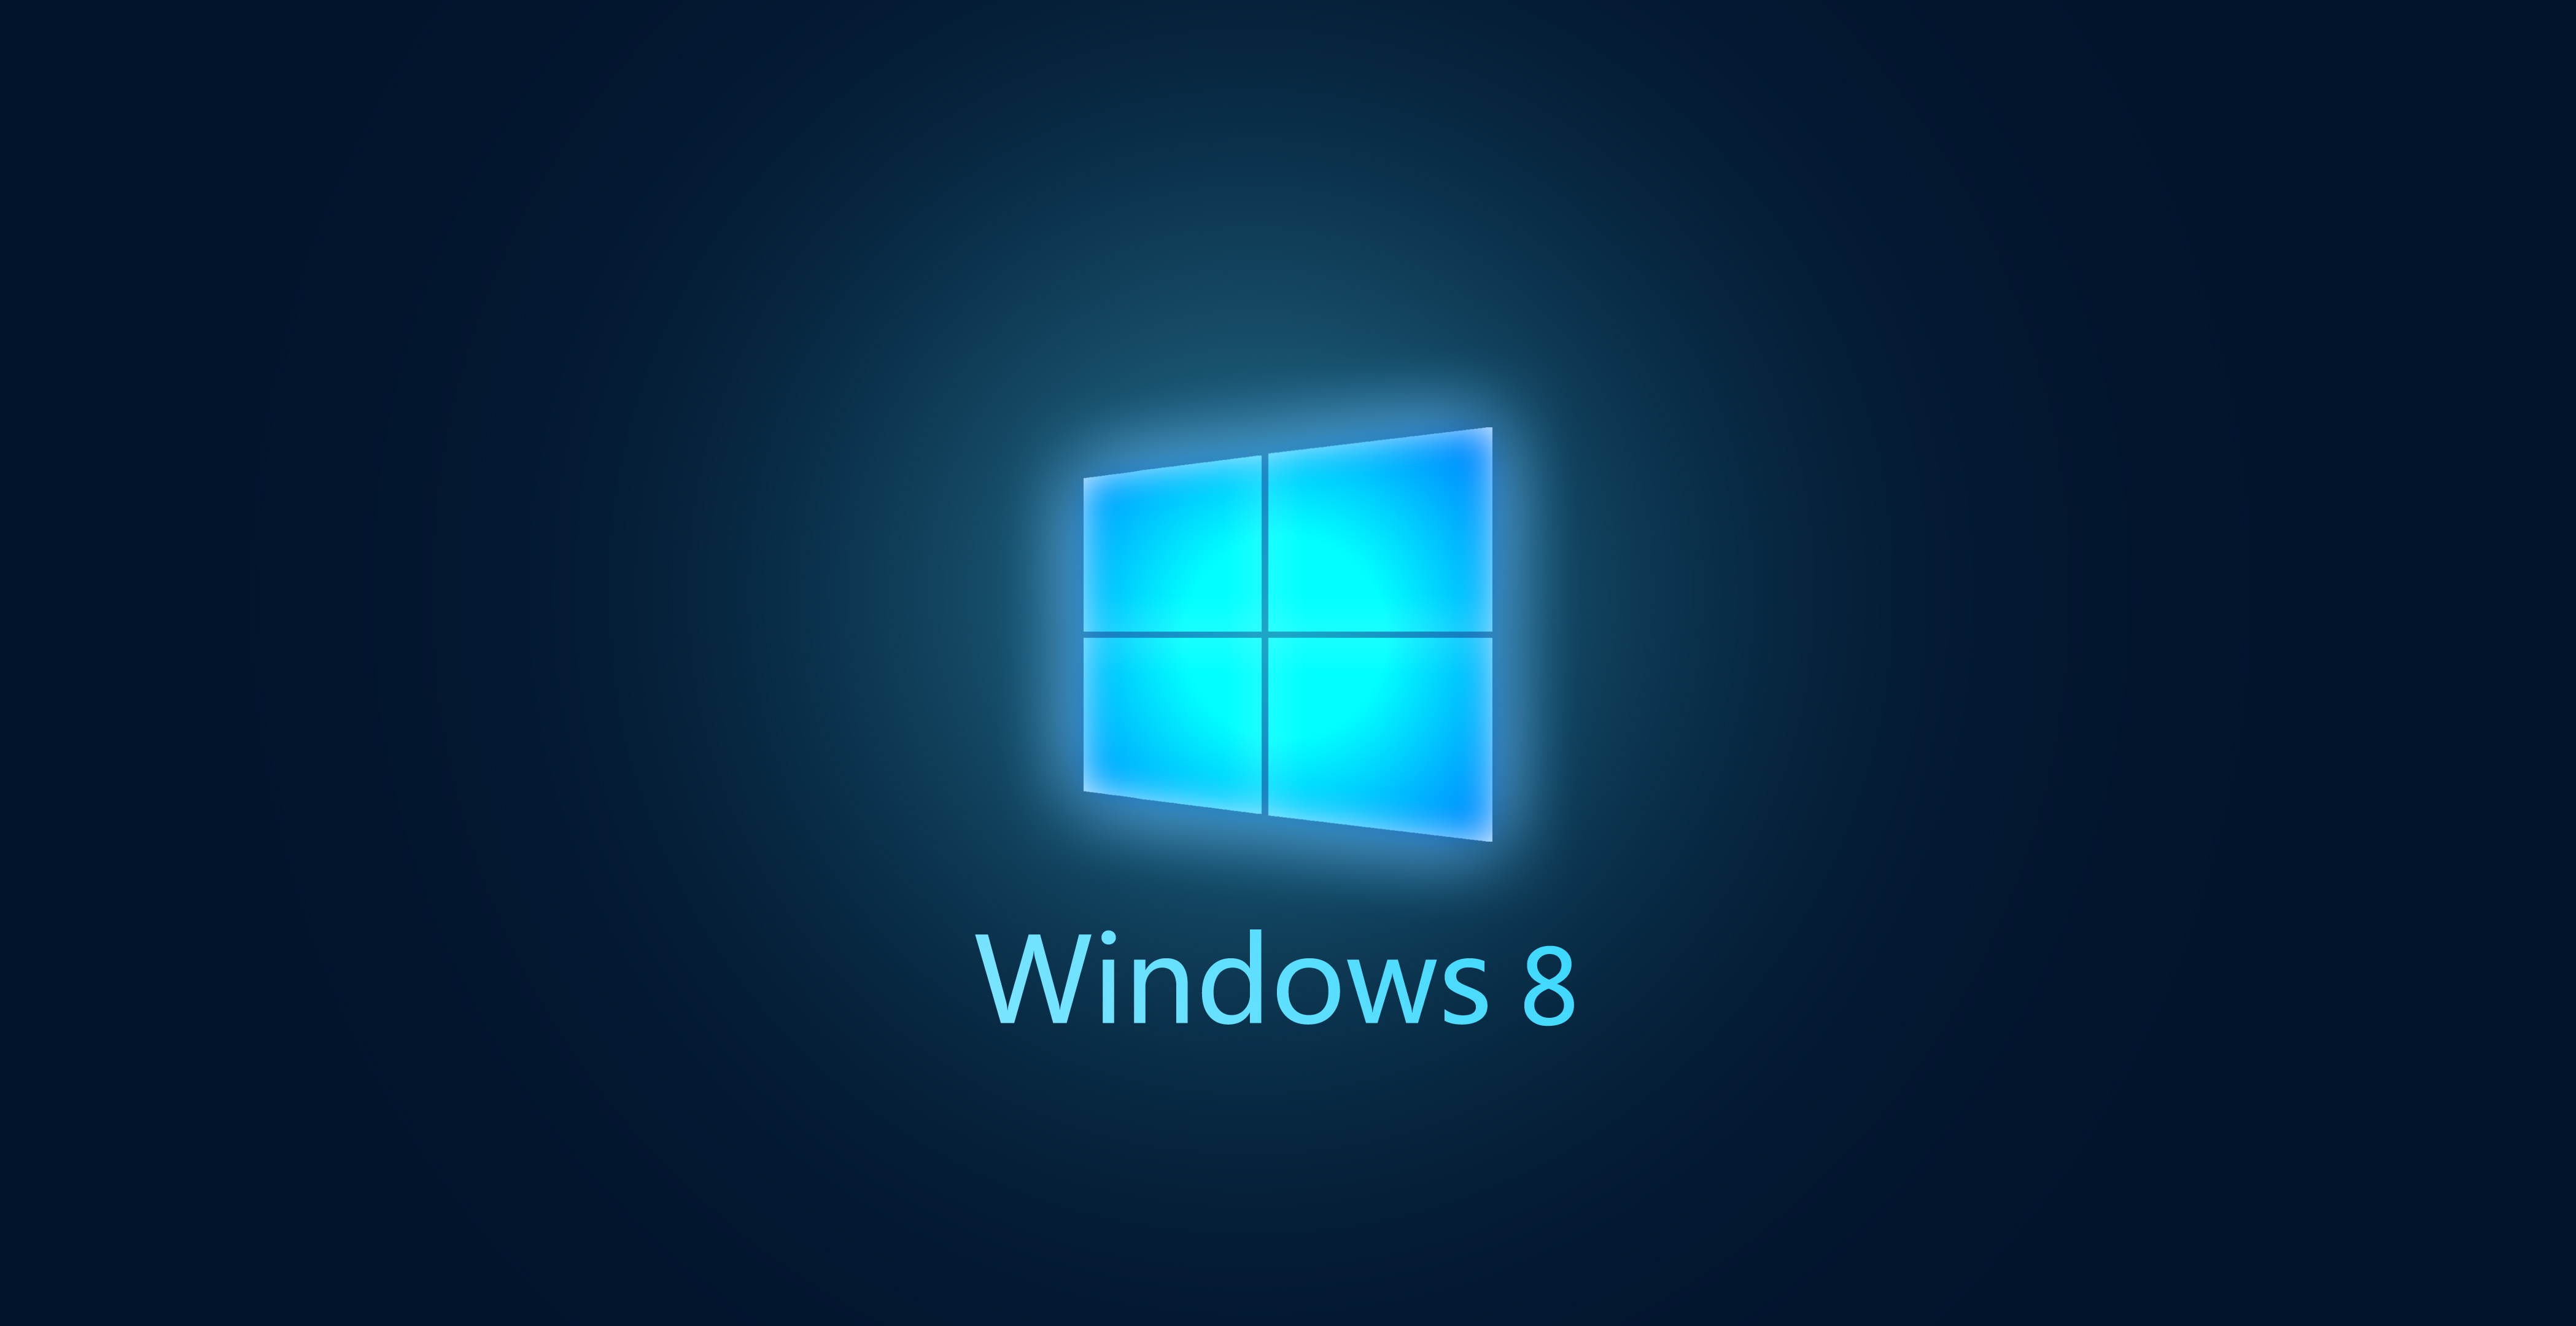 General 4196x2160 windows logo Microsoft operating system technology brand logo simple background digital art Windows 8